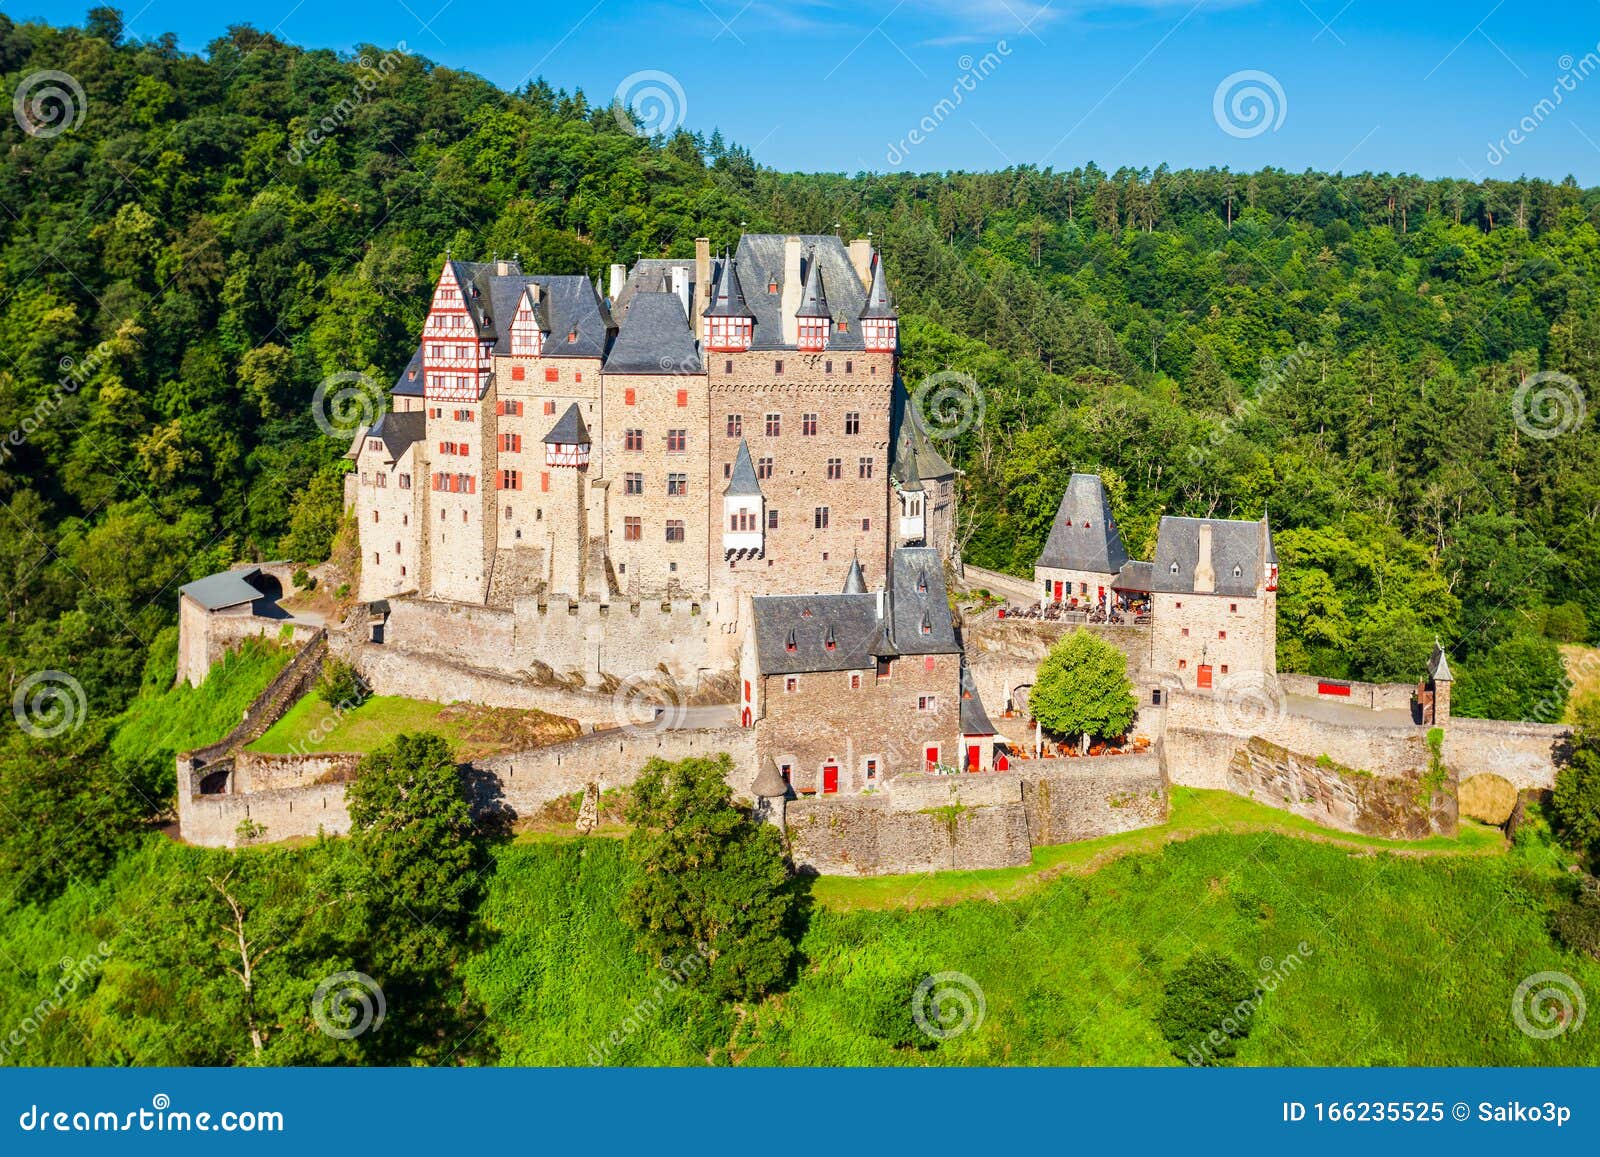 Eltz Castle Near Koblenz Germany Stock Image Image Of Fortification Germany